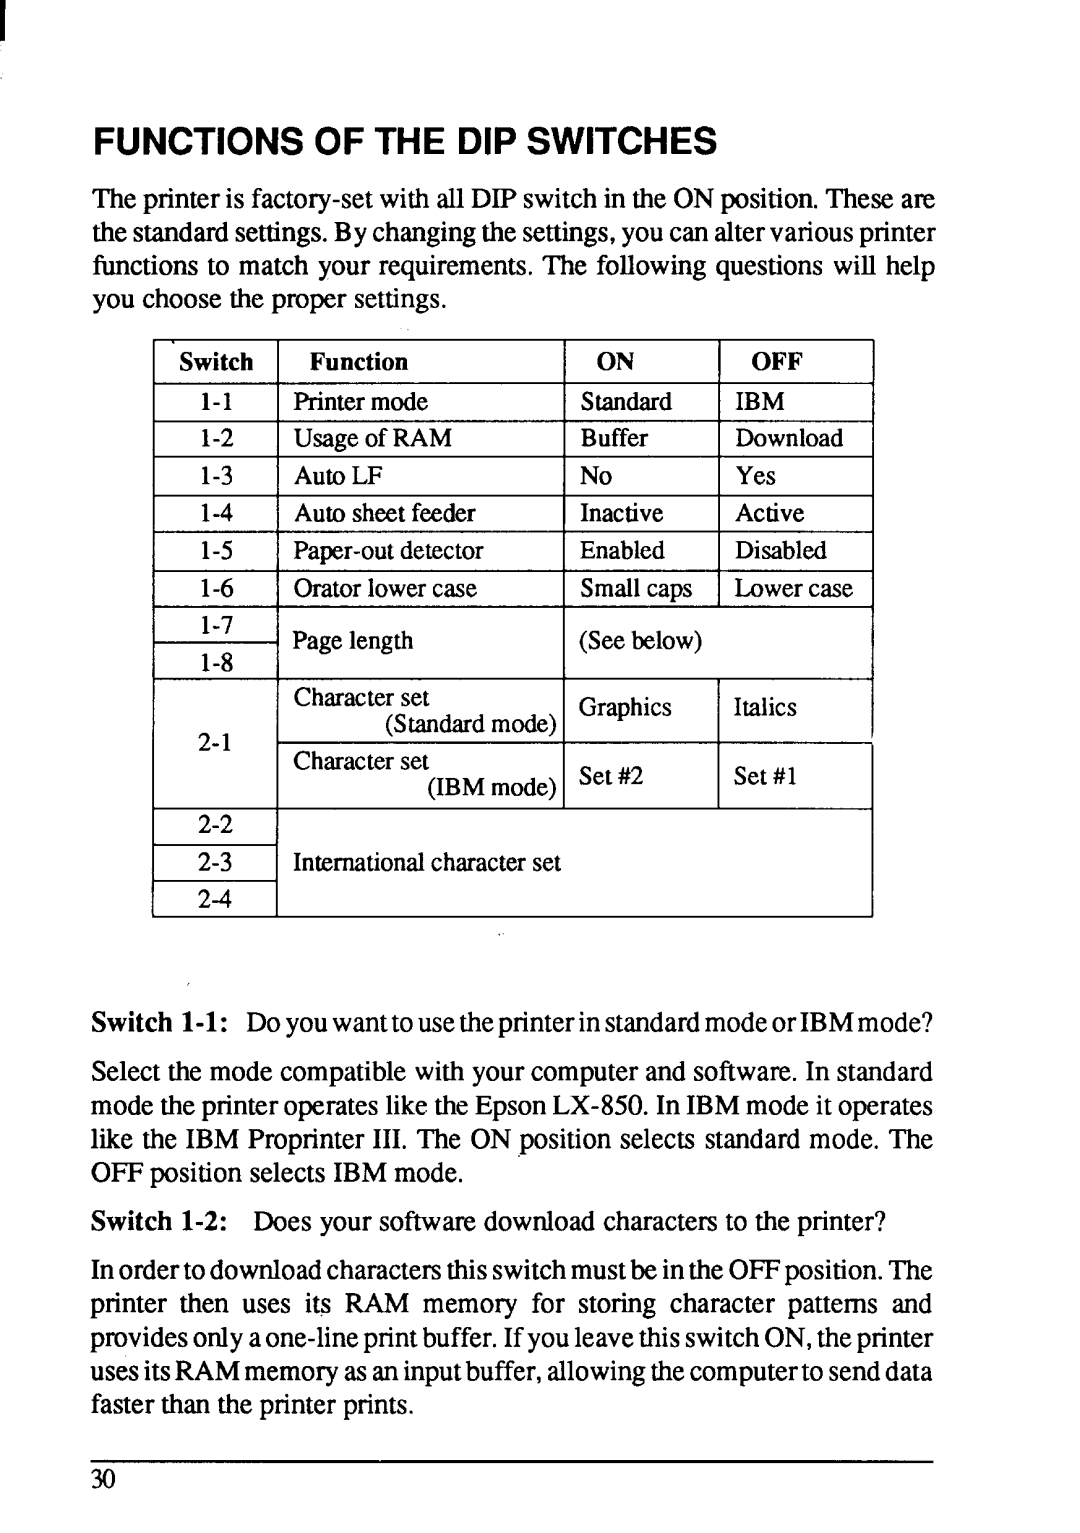 Star Micronics NX-1001 manual 1----1, Switch, Function, Printermode, Standard 